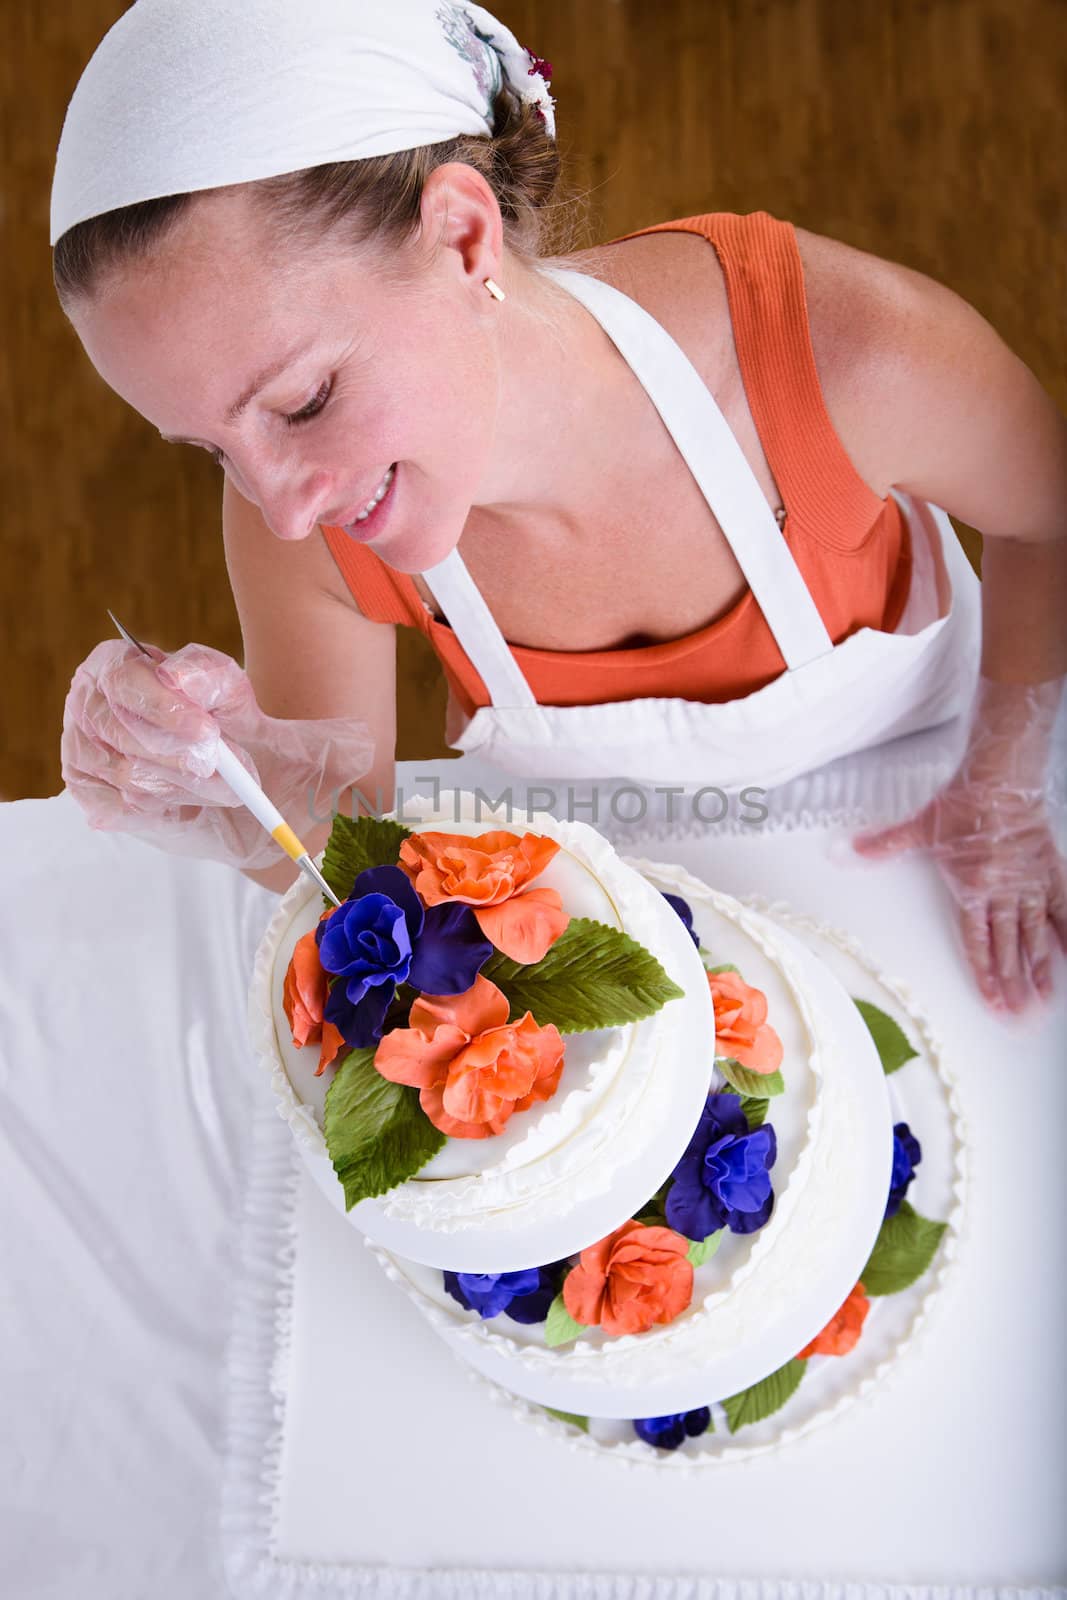 Retouching Wedding Cake by coskun